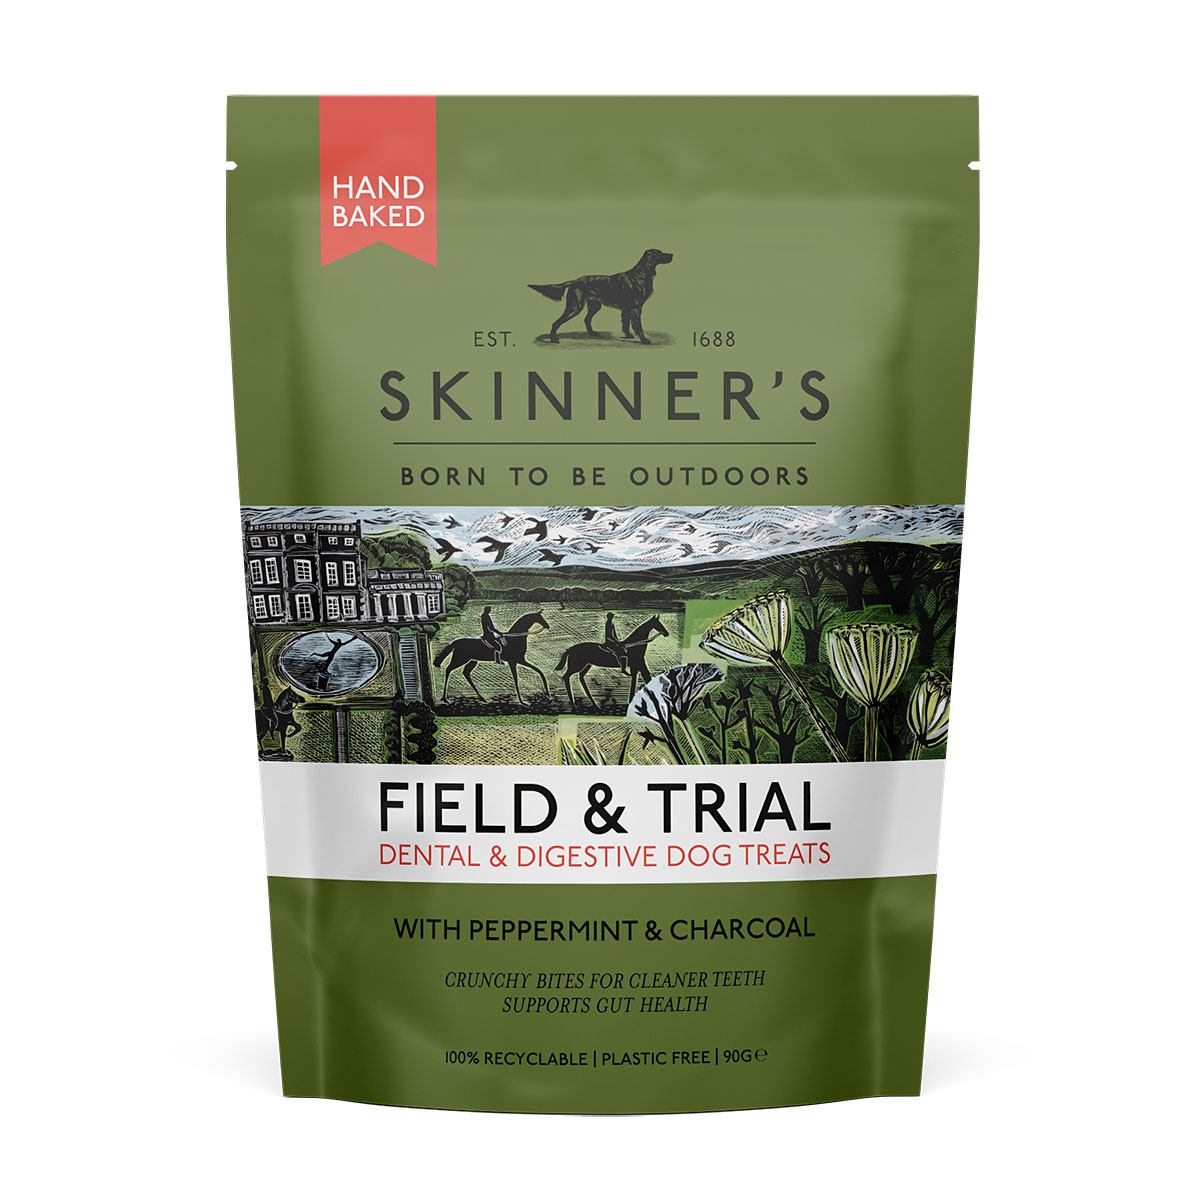 Skinners Field & Trial Dental & Digestive Dog Treats